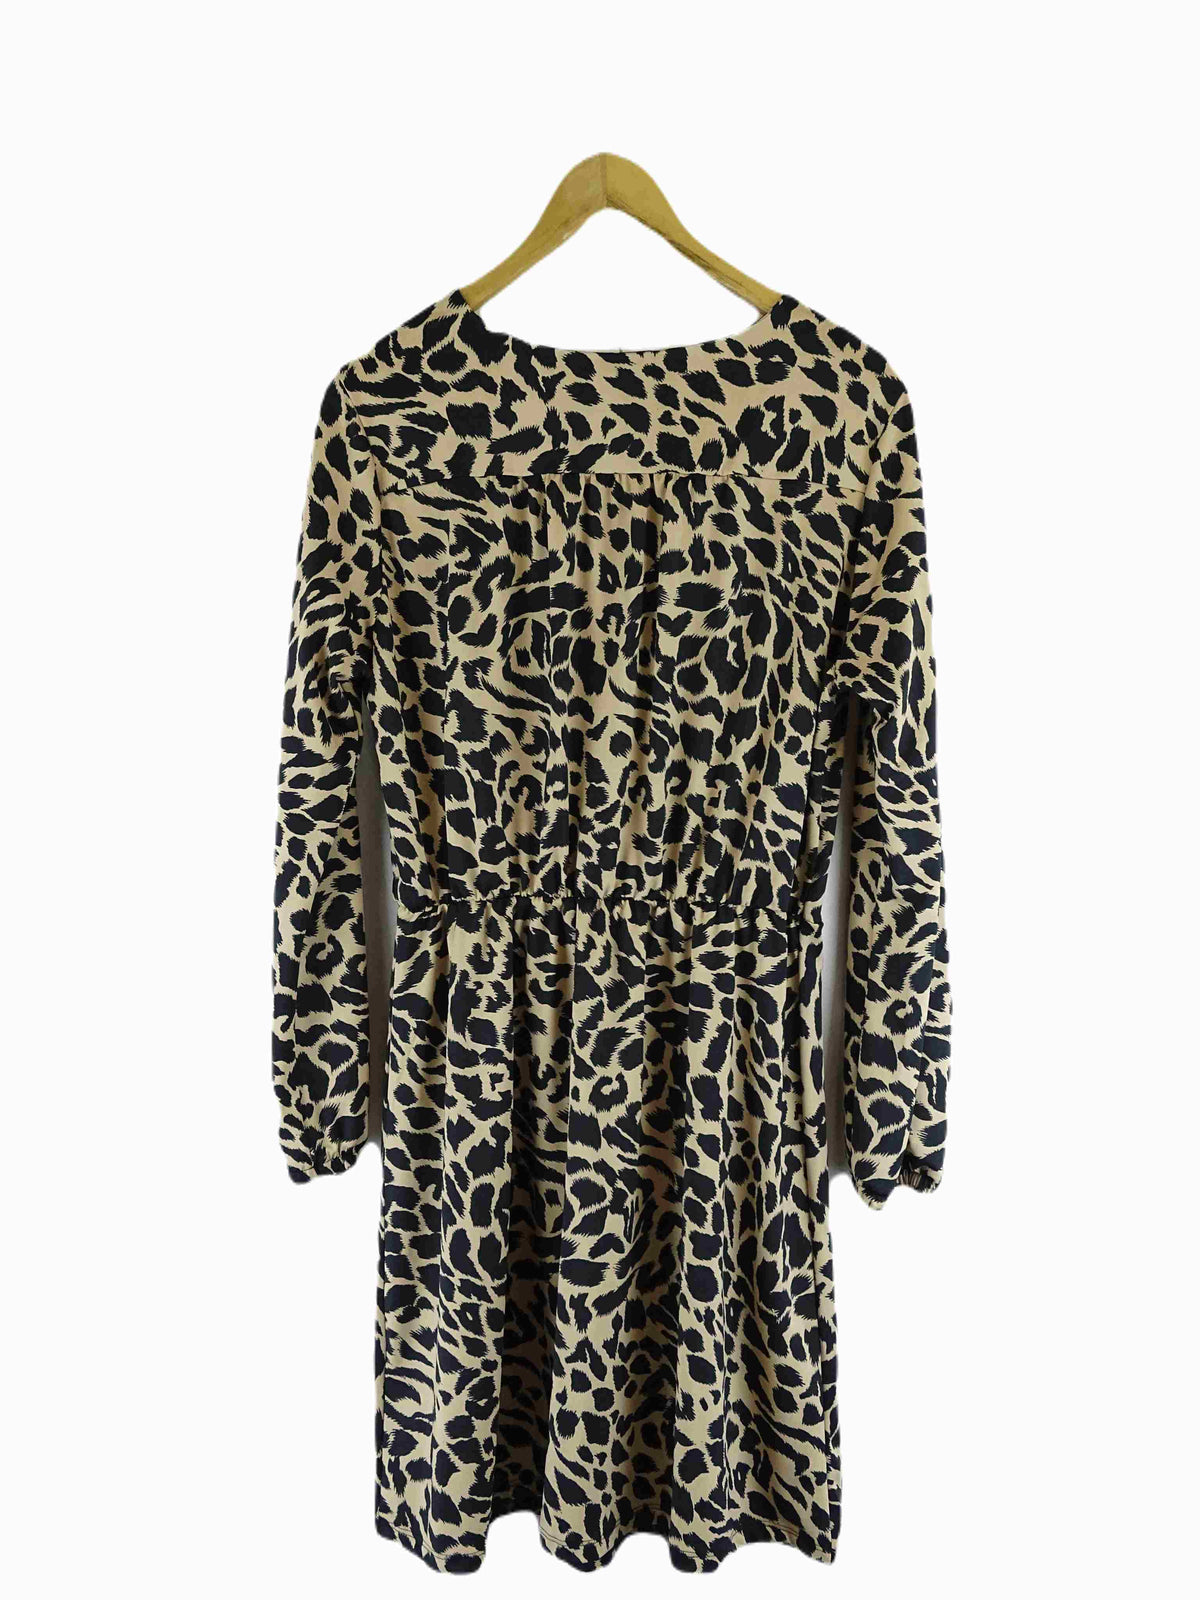 Marks and Spencer Leopard Print Dress 14